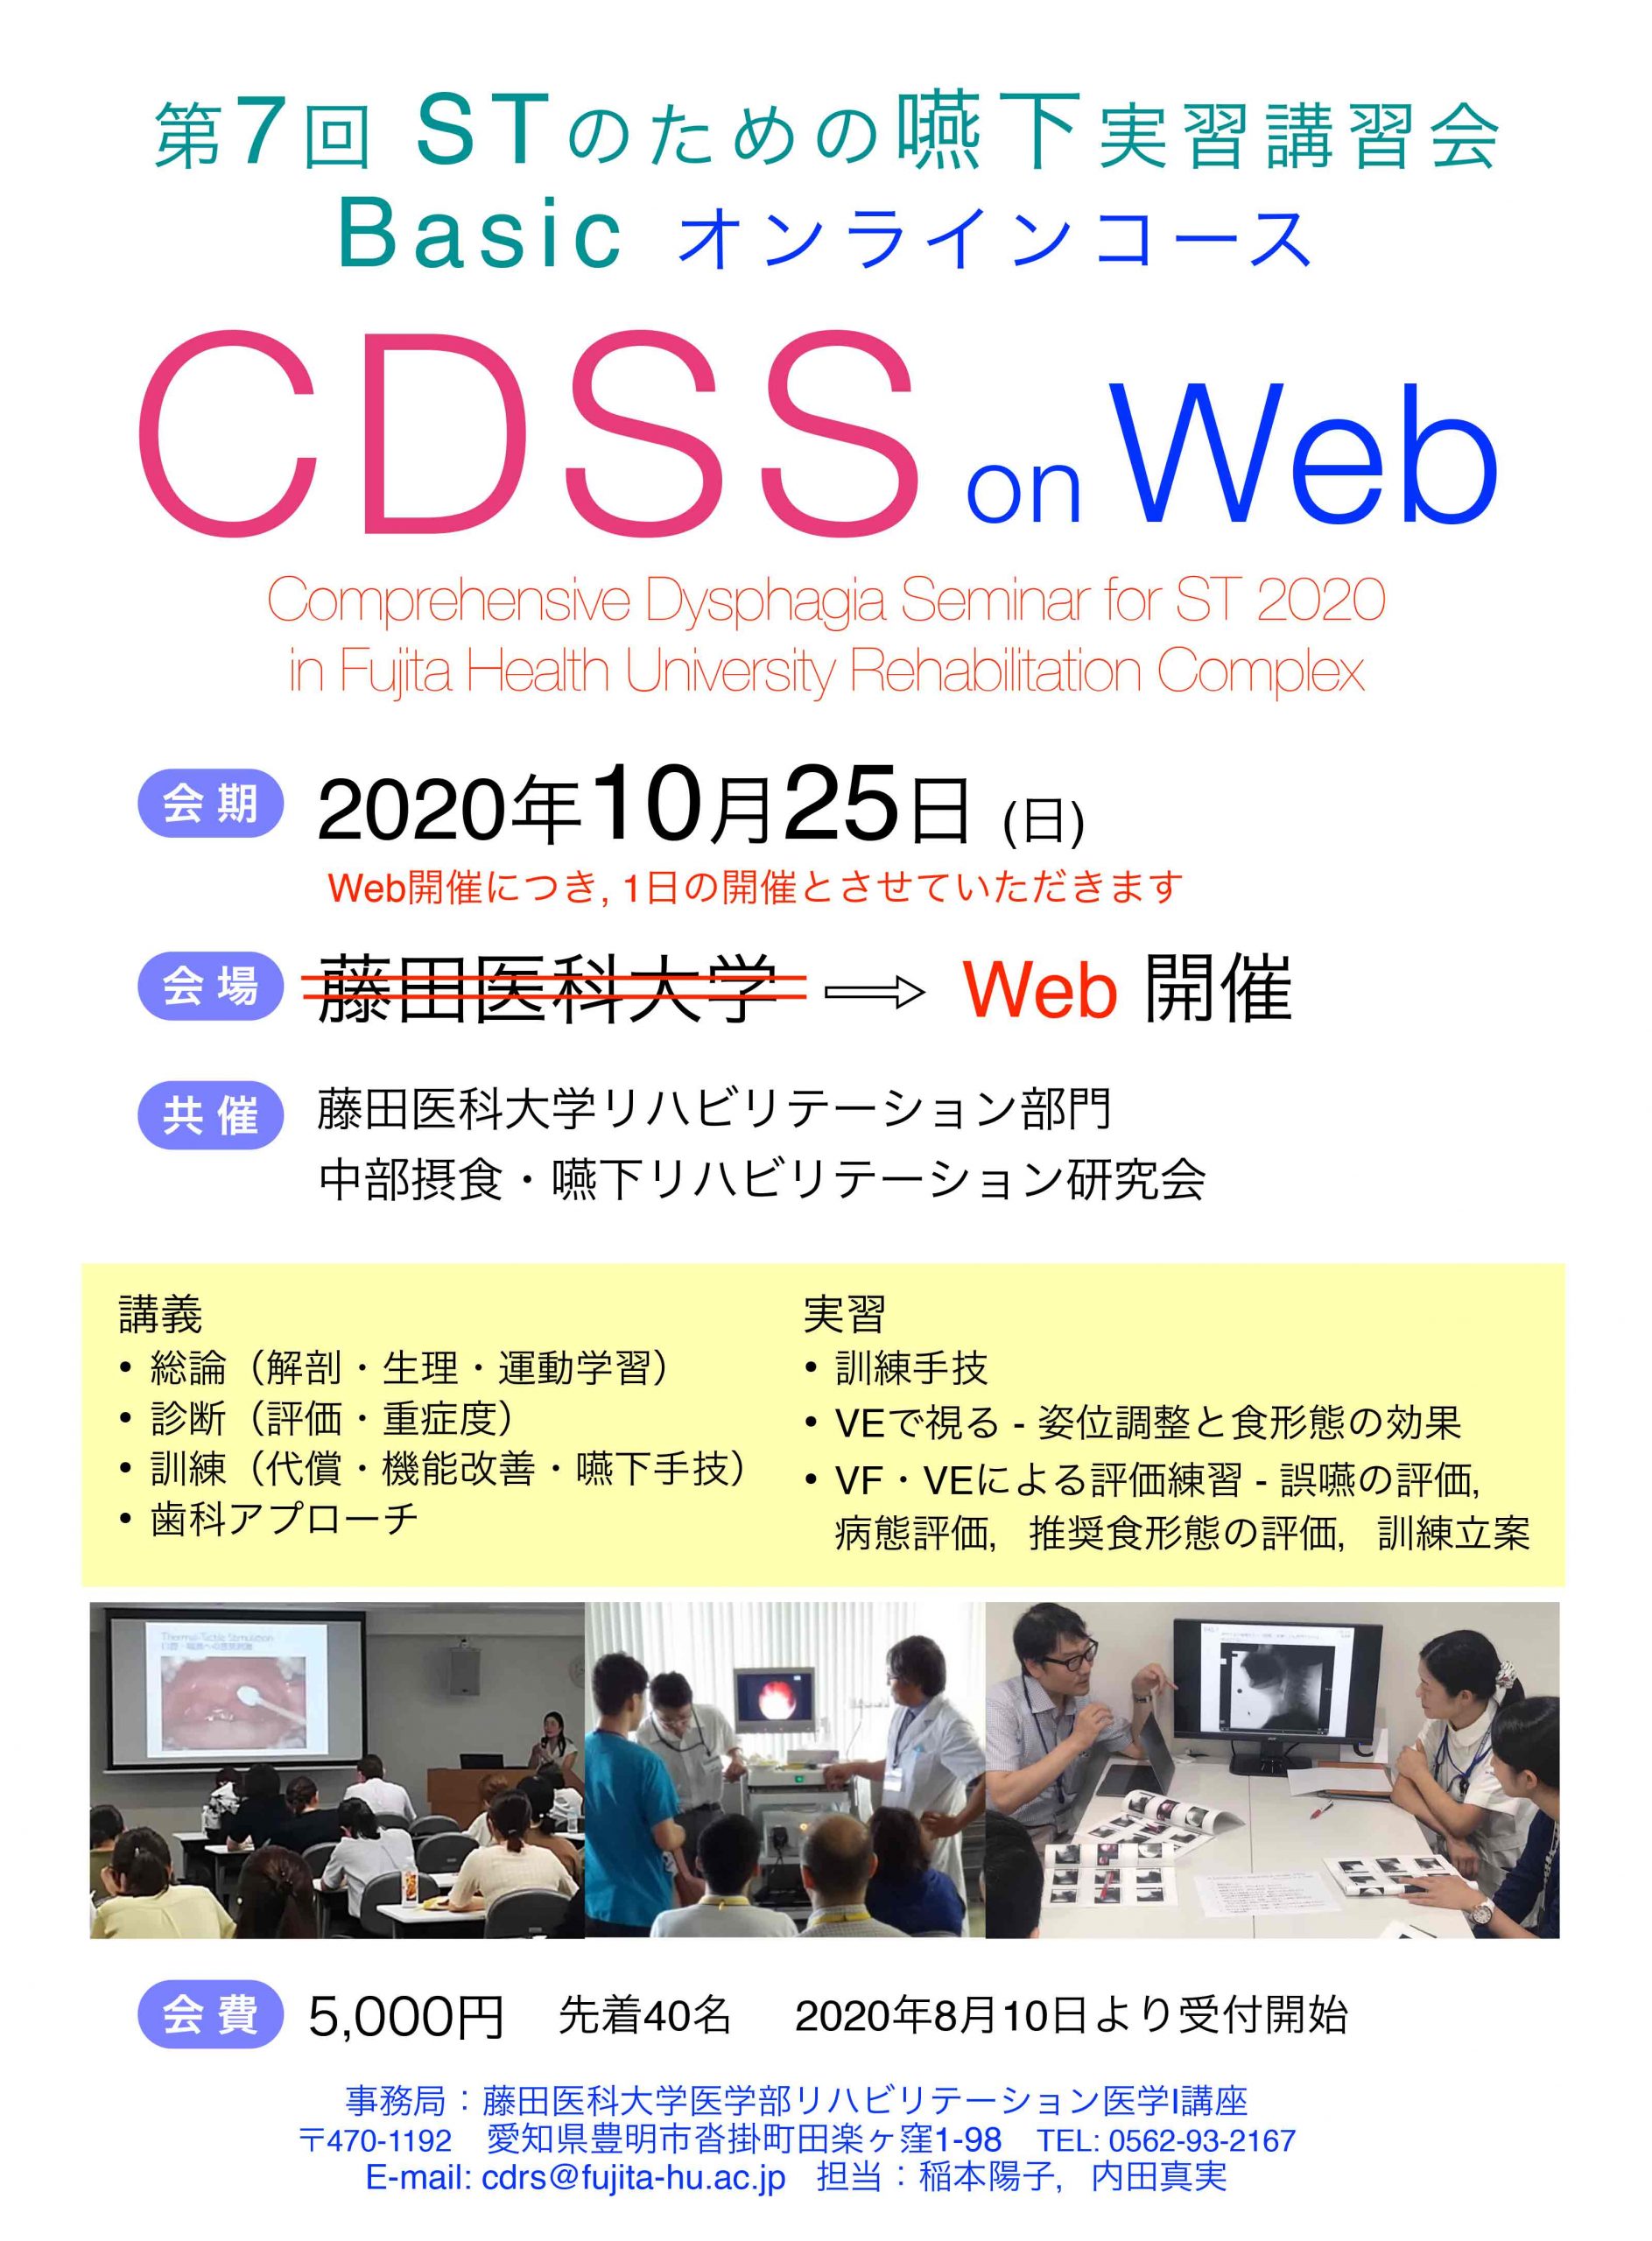 CDSSon Web